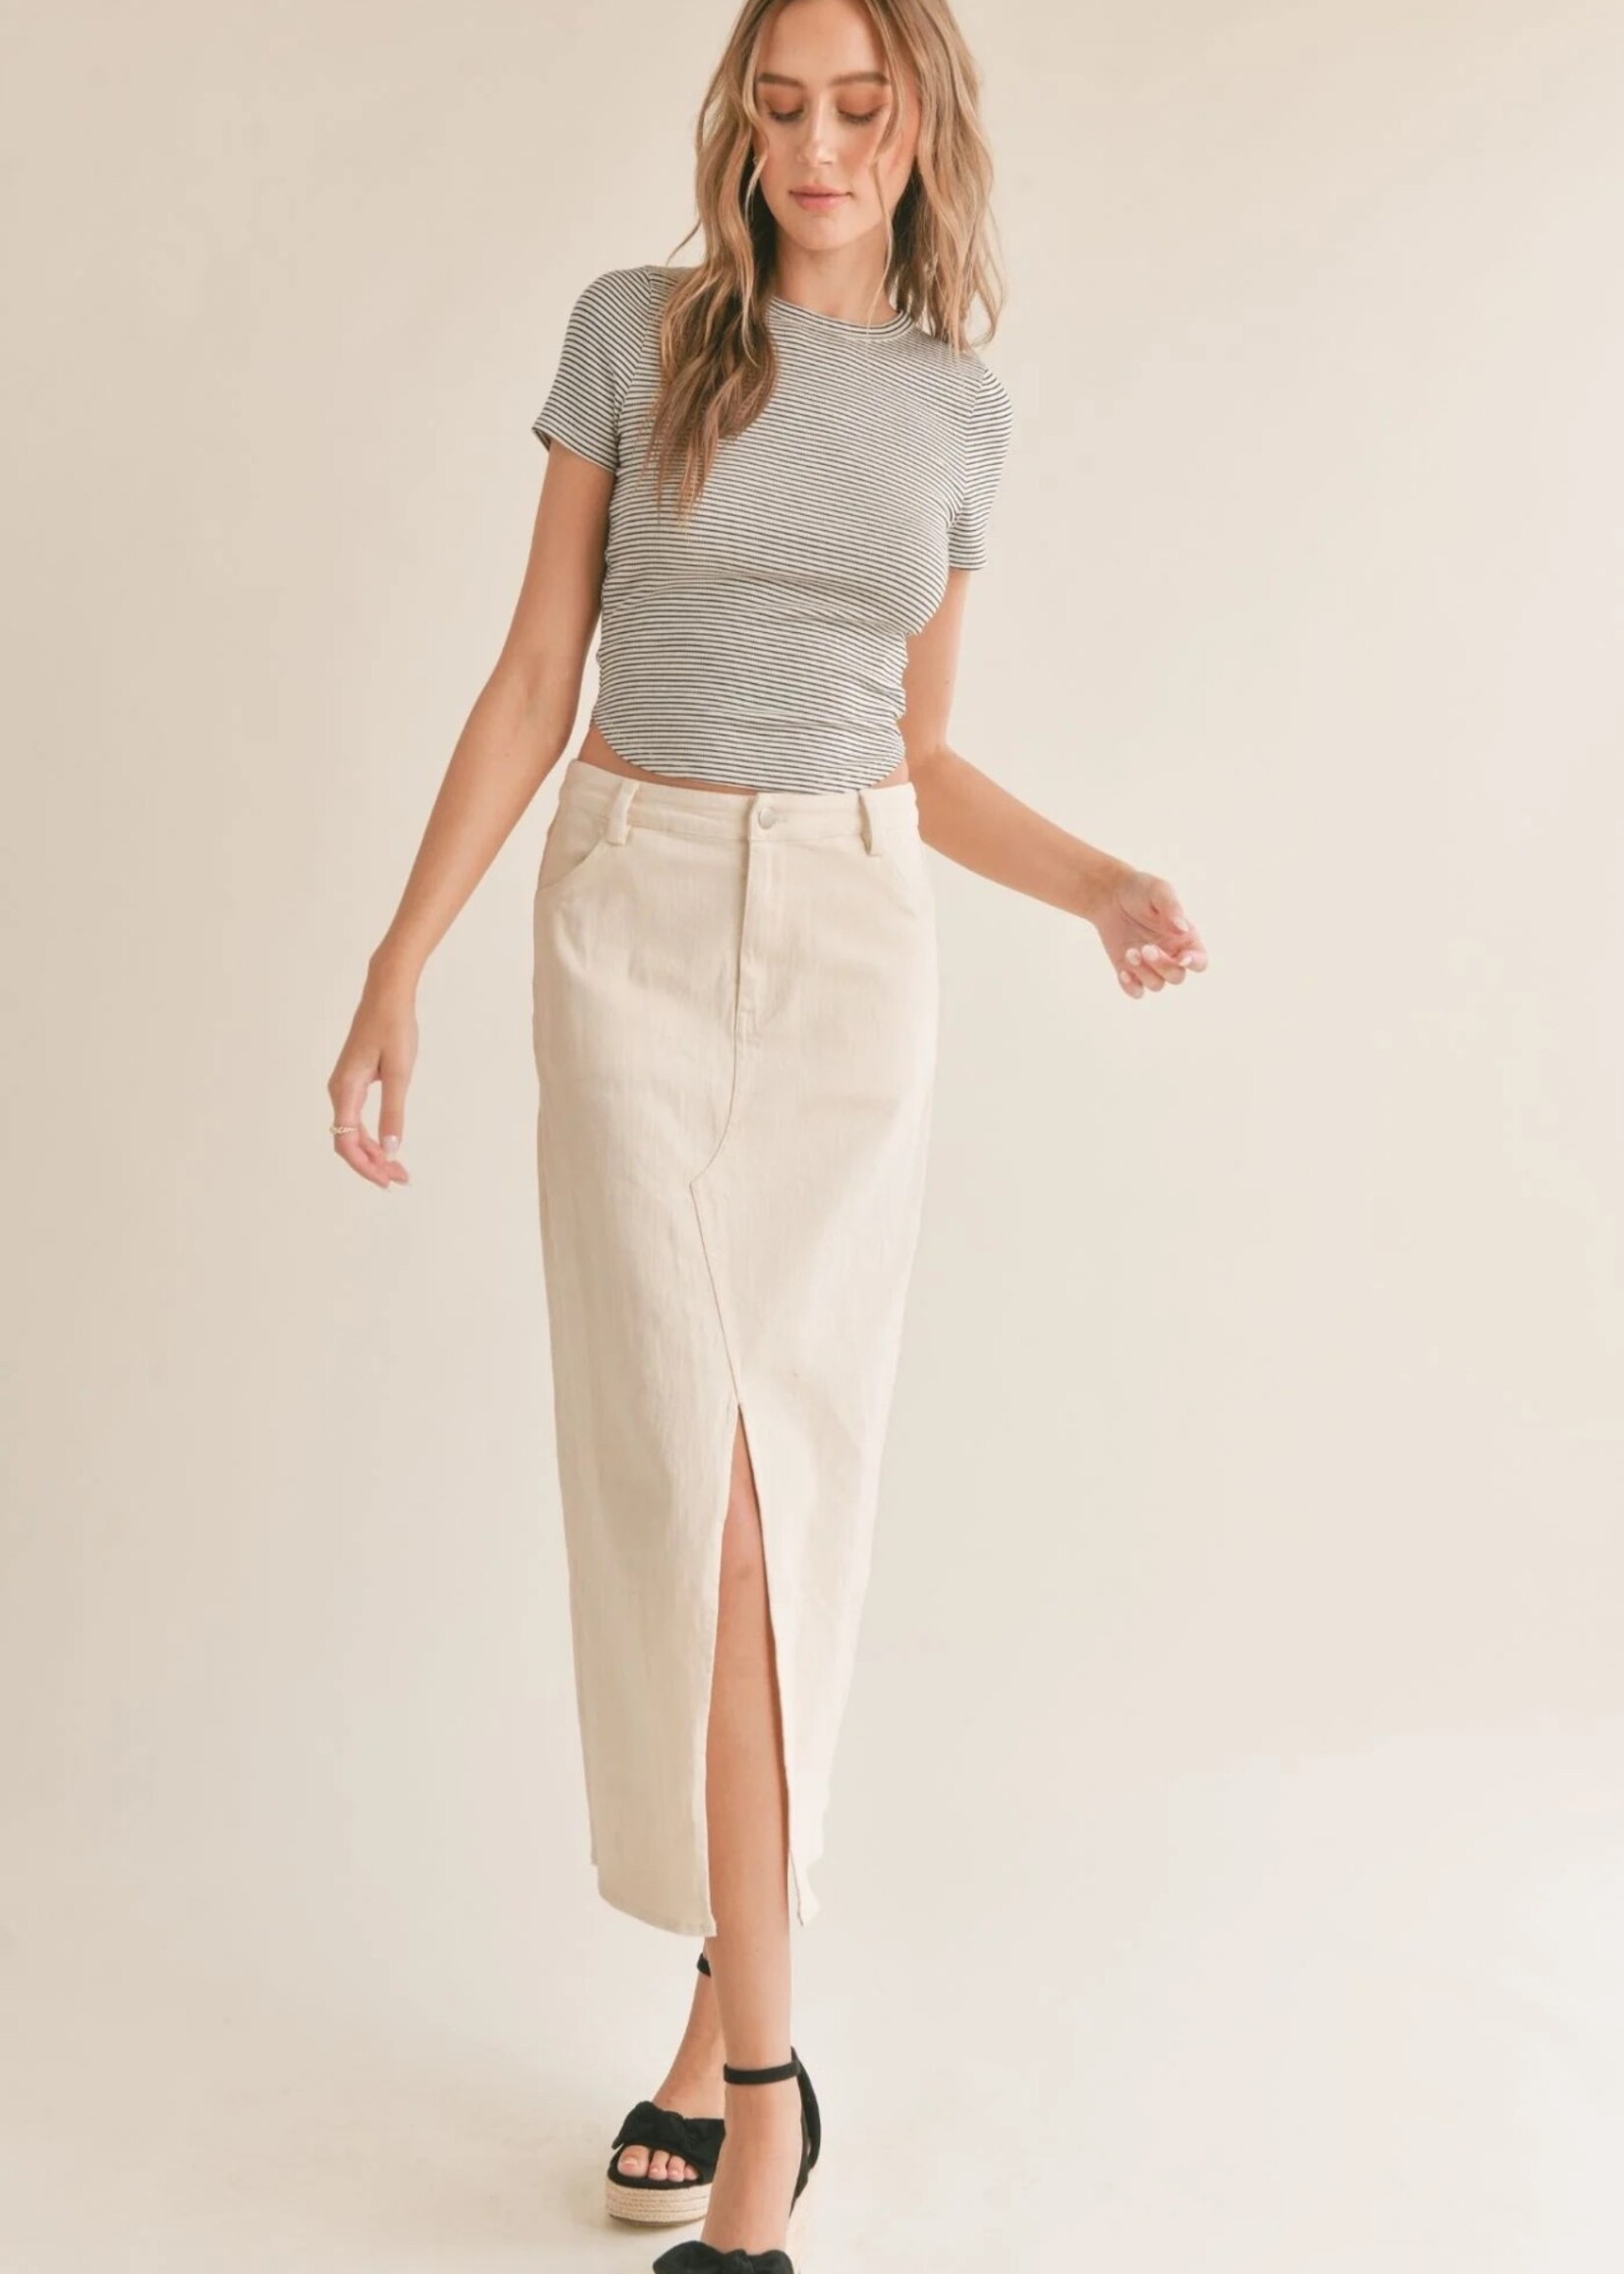 Chambray & Camo: Sleeveless denim top, Pencil skirt & Beige details } -  Meagan's Moda